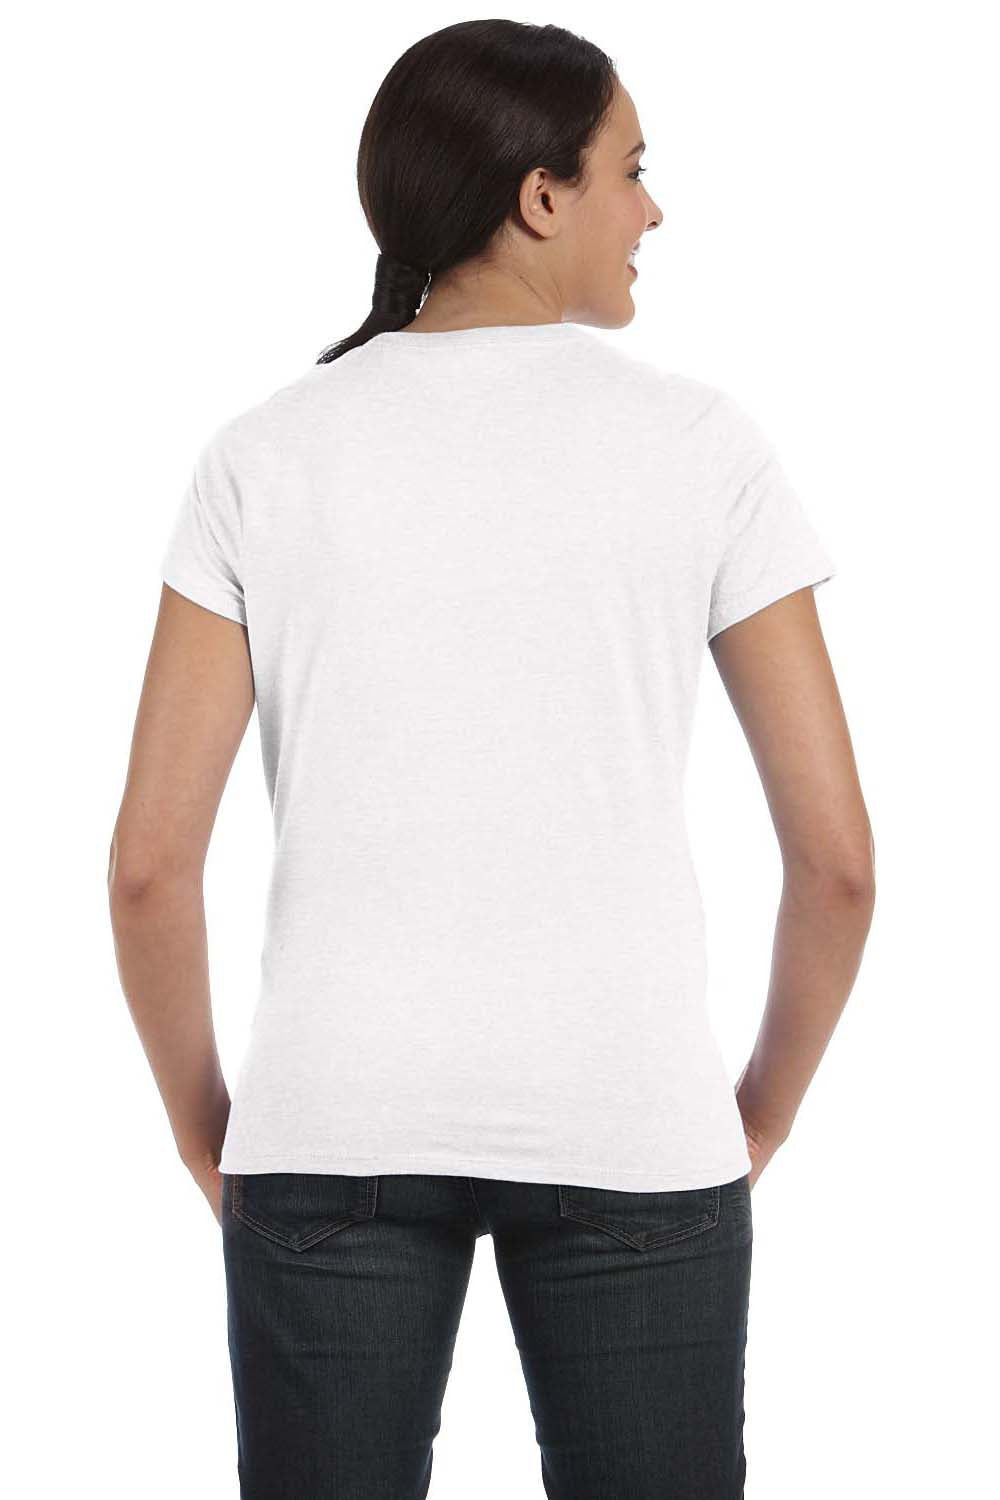 Hanes SL04 Womens Nano-T Short Sleeve Crewneck T-Shirt White Back